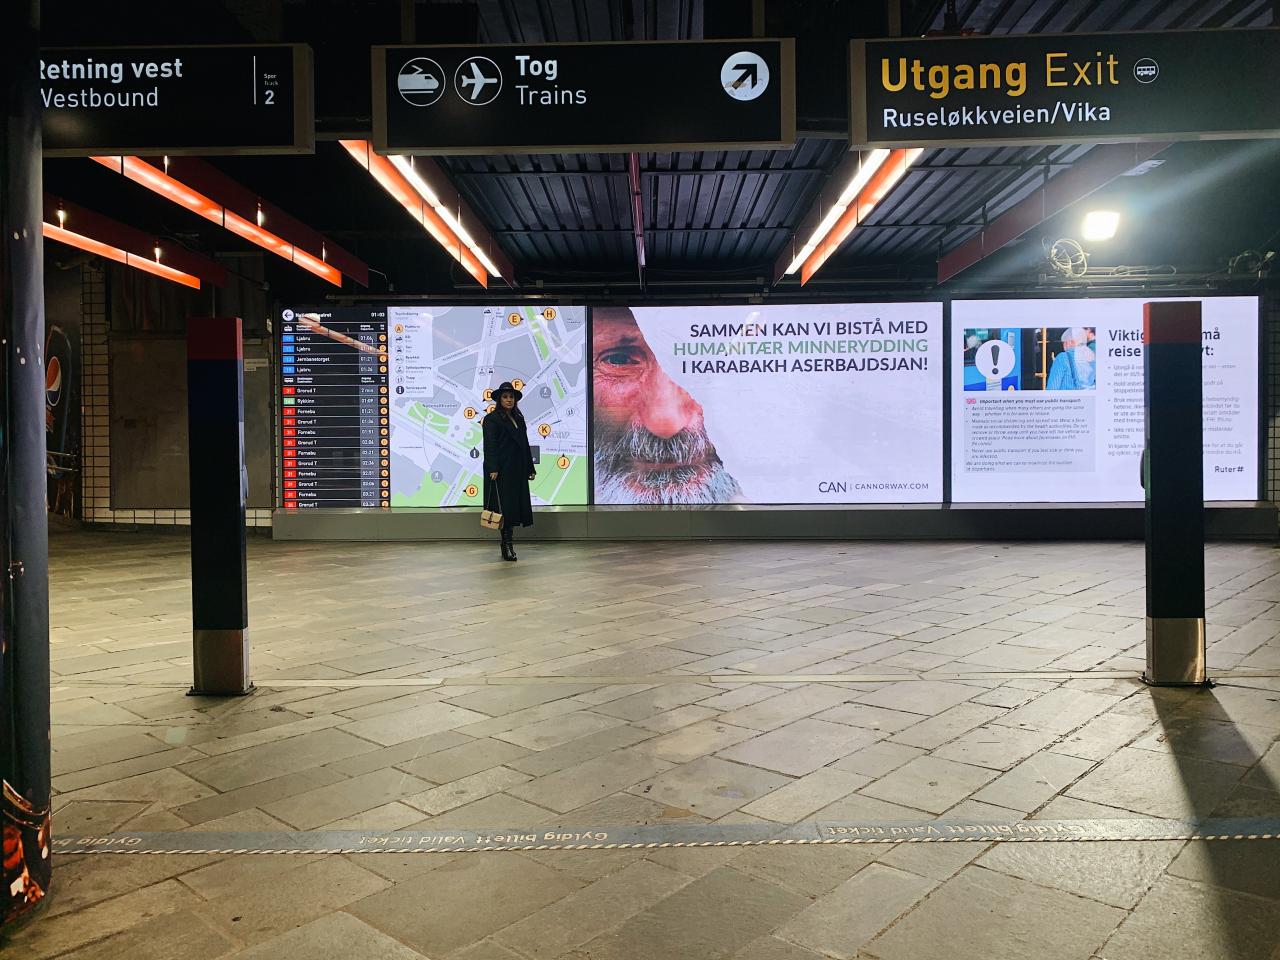 Some 200 billboards in Oslo reflect Armenian vandalism - Gallery Image